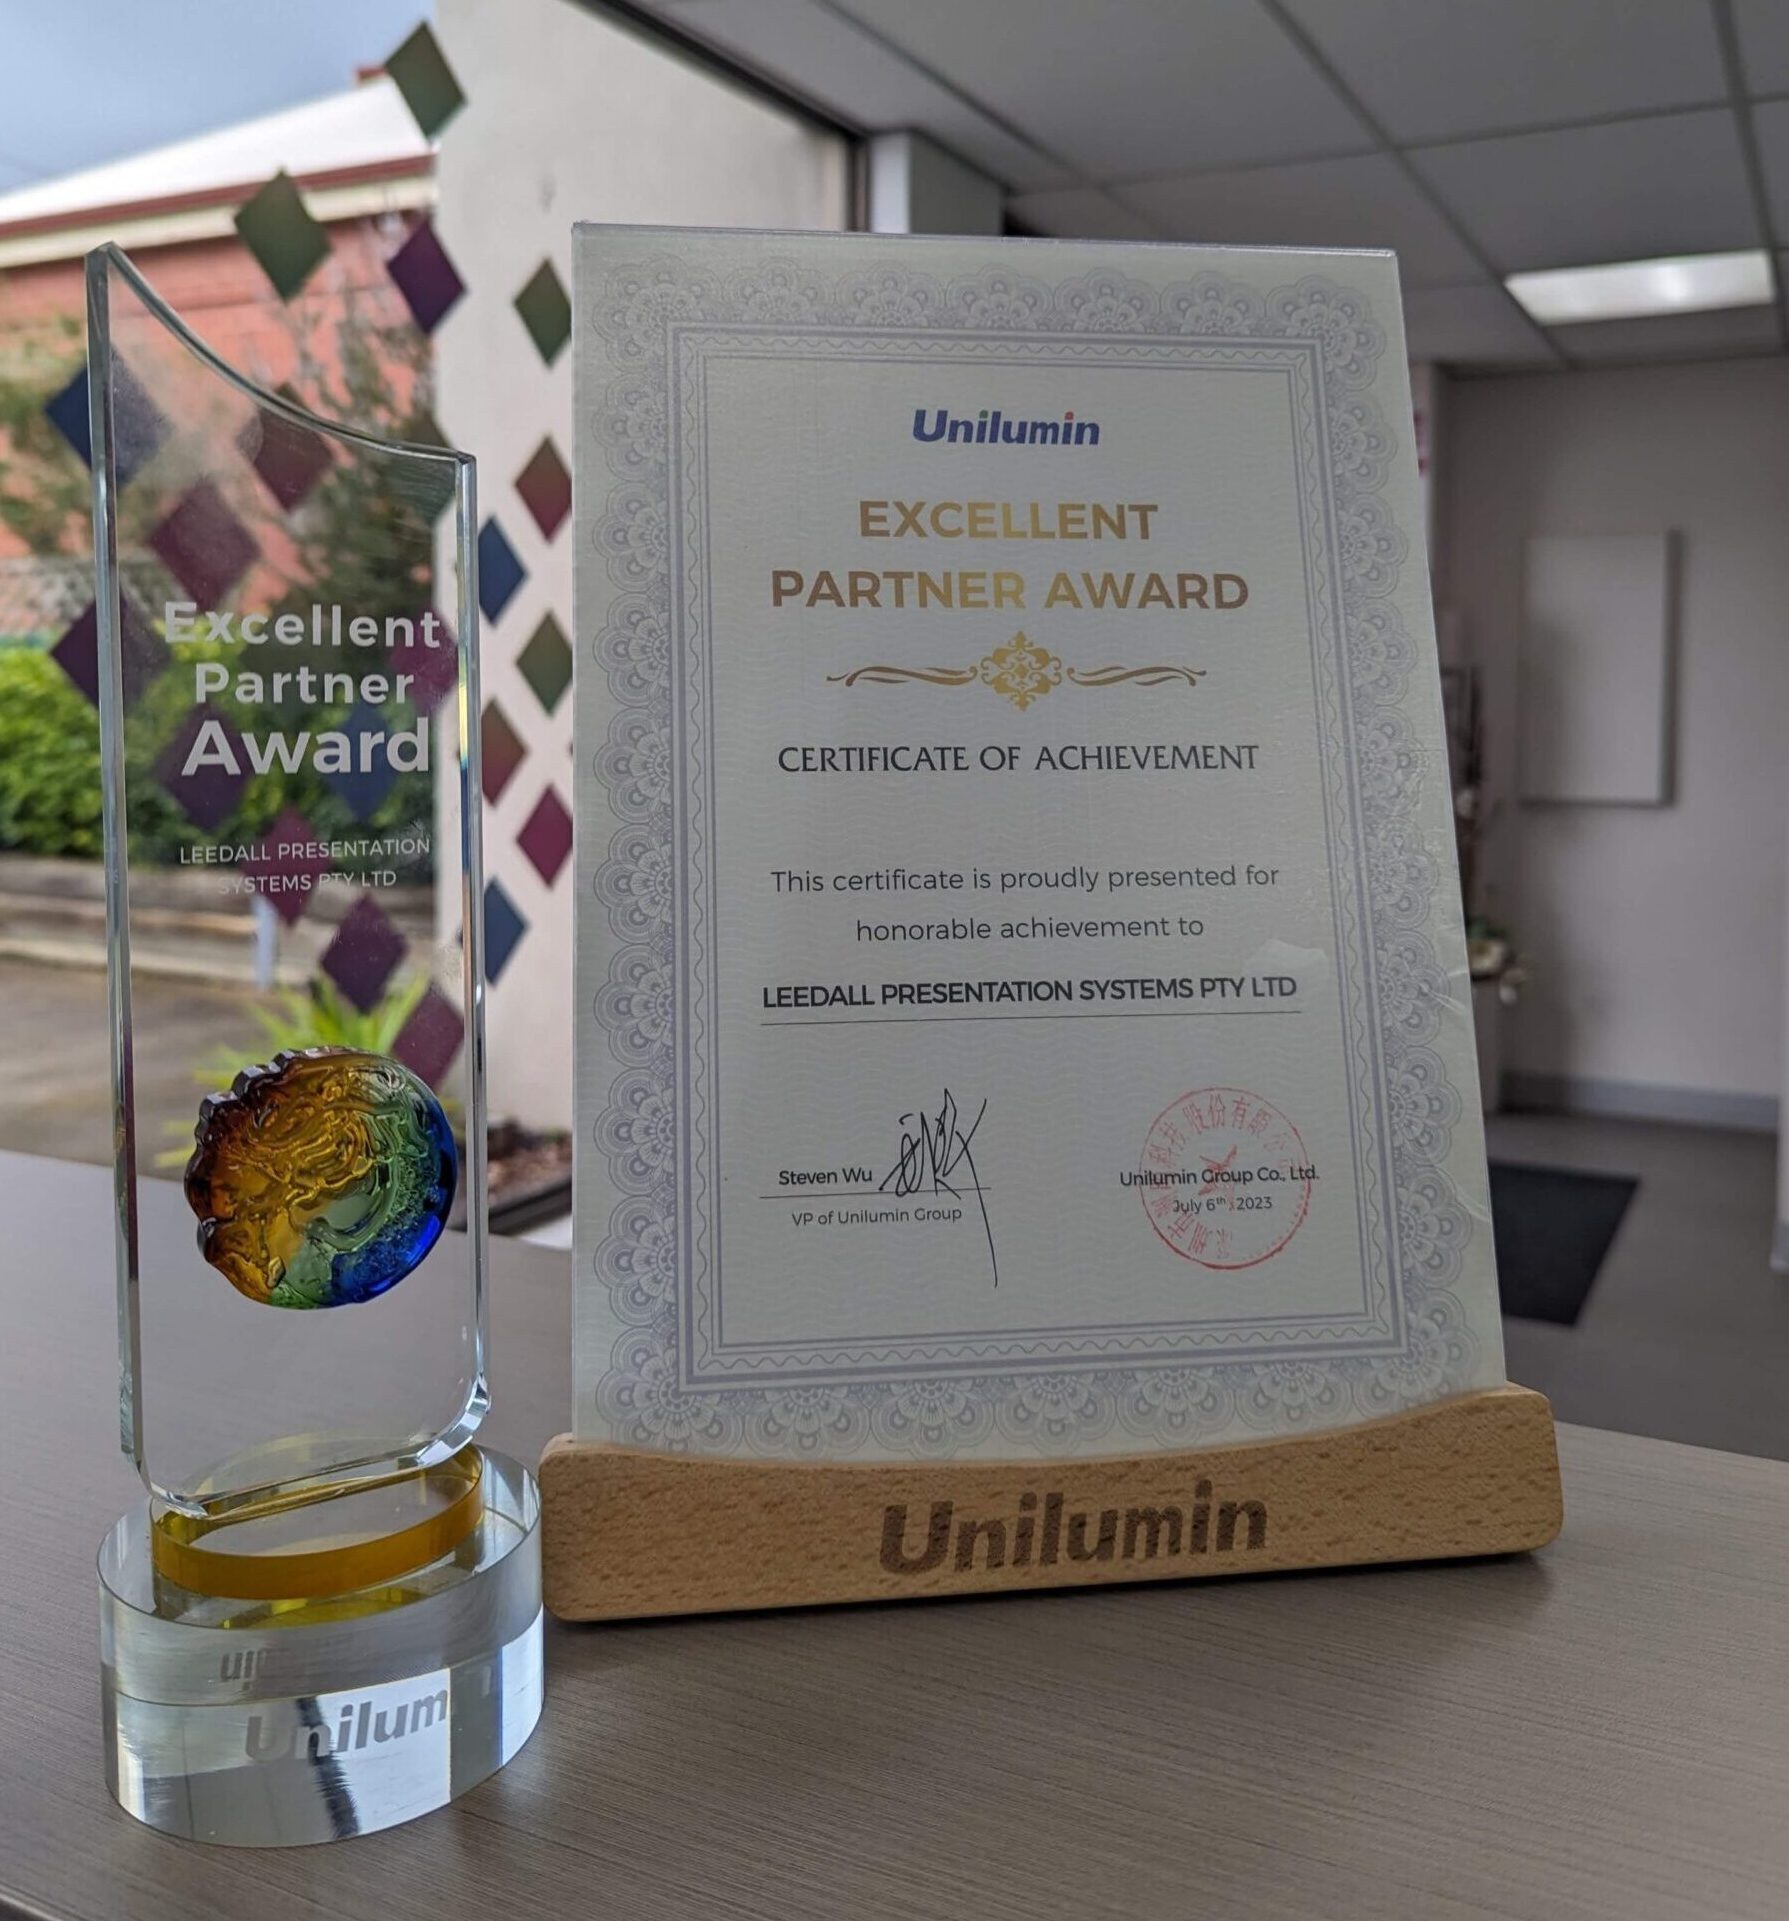 Unilumin Excellent Partner Award.